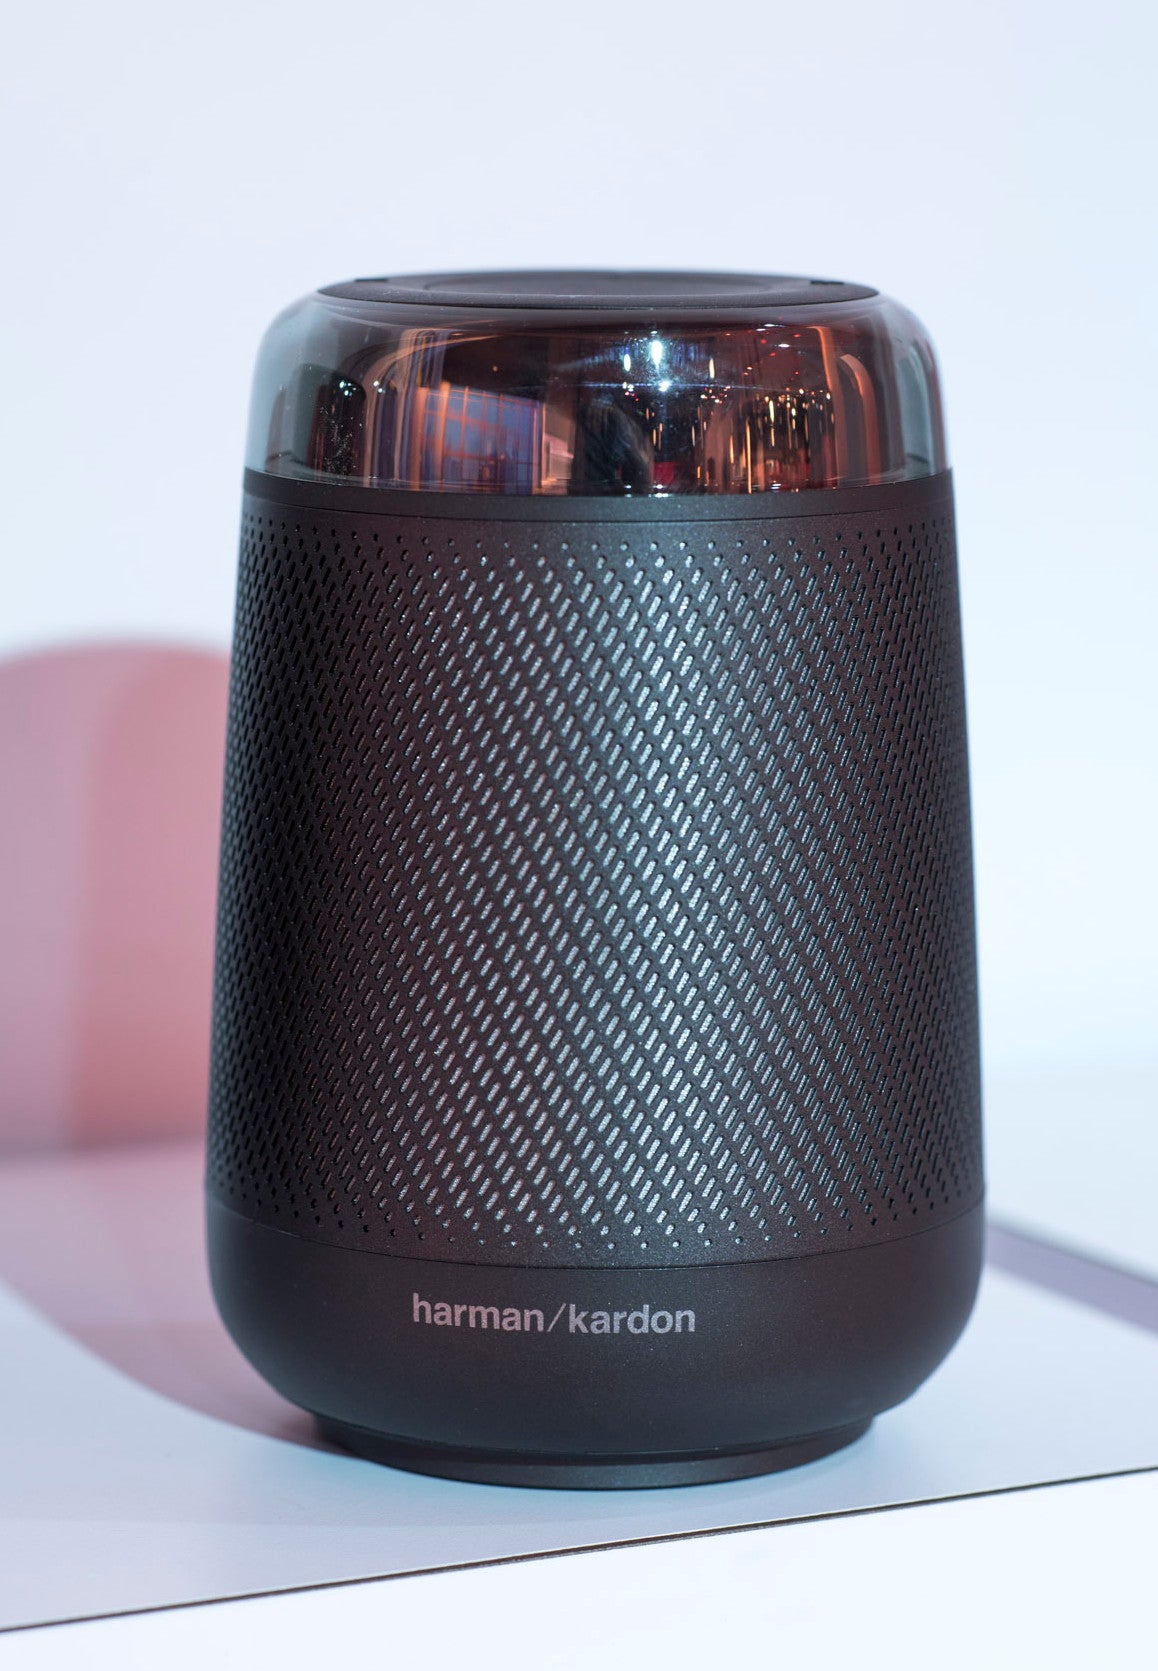 Harman Kardon announces the exquisite Allure Portable smart speaker with Alexa